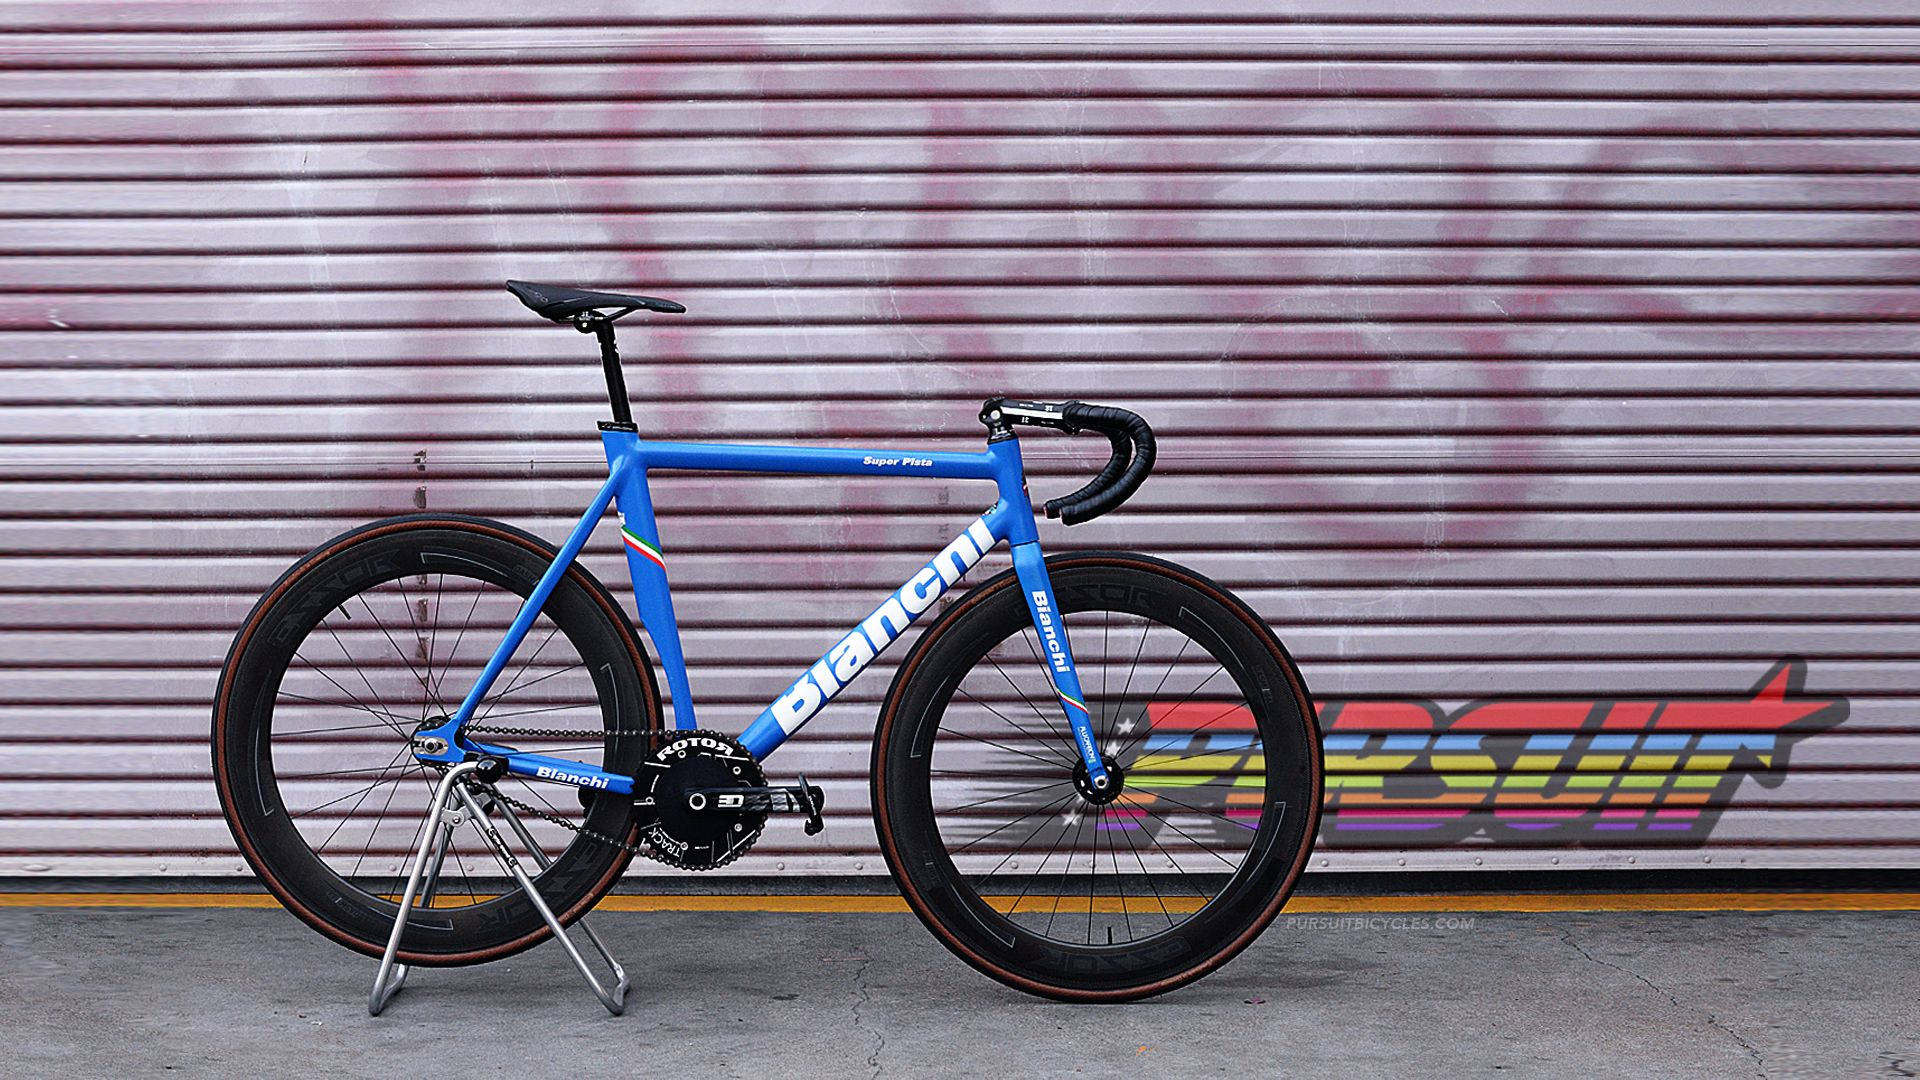 Bianchi Blue And Black Road Bike Wallpaper